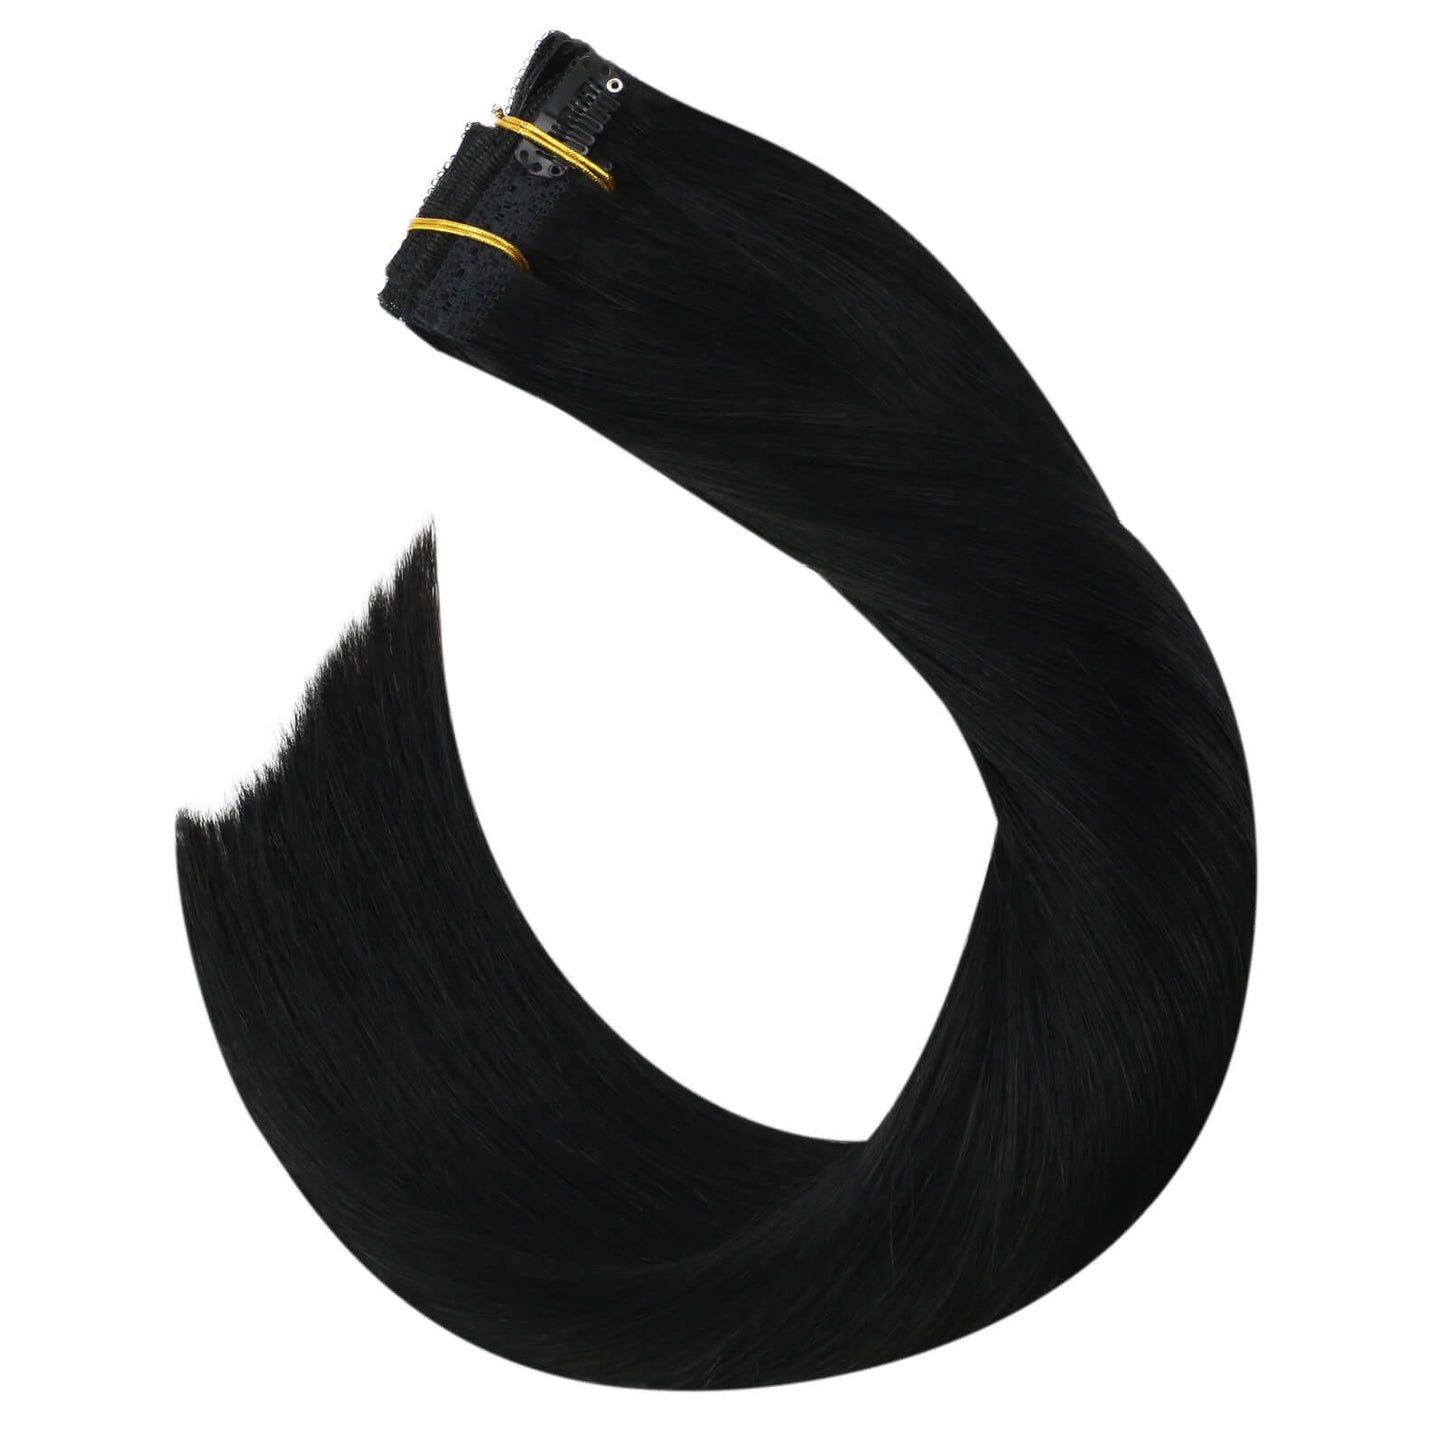 Clip in Real Hair Extensions Human Hair Full Head Natual Jet Black Hair #1